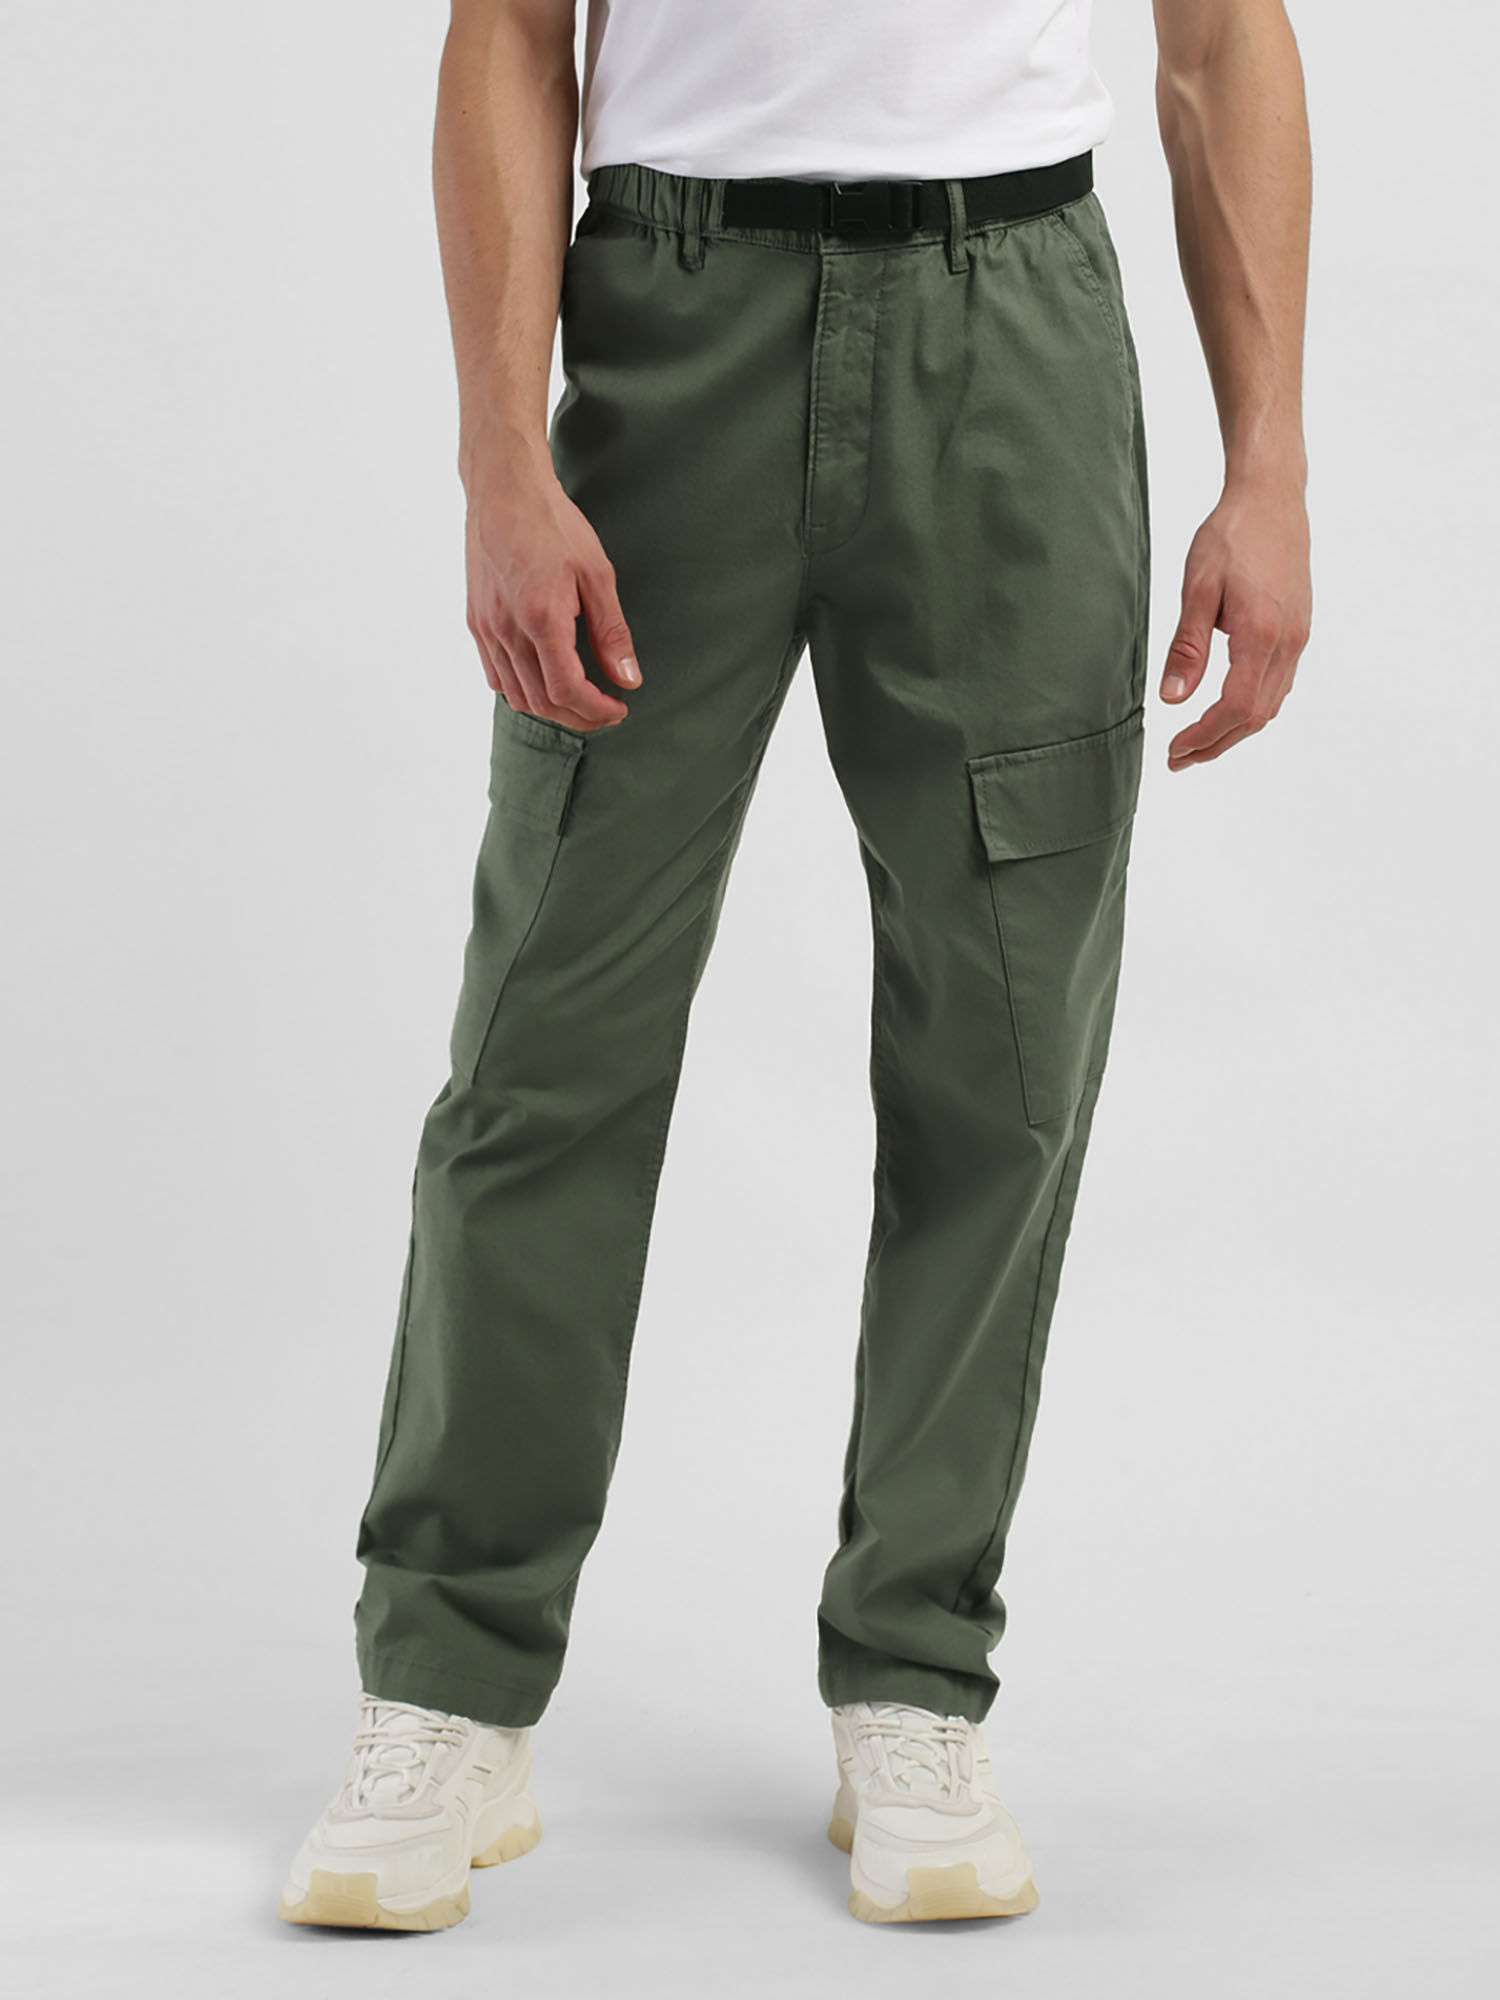 Cargo Pants for Men, Outdoor Cargo Wear Cargo Men's Multiple Pockets Work  Pants Straight Type Trousers Combat Men's Pants Green at Amazon Men's  Clothing store